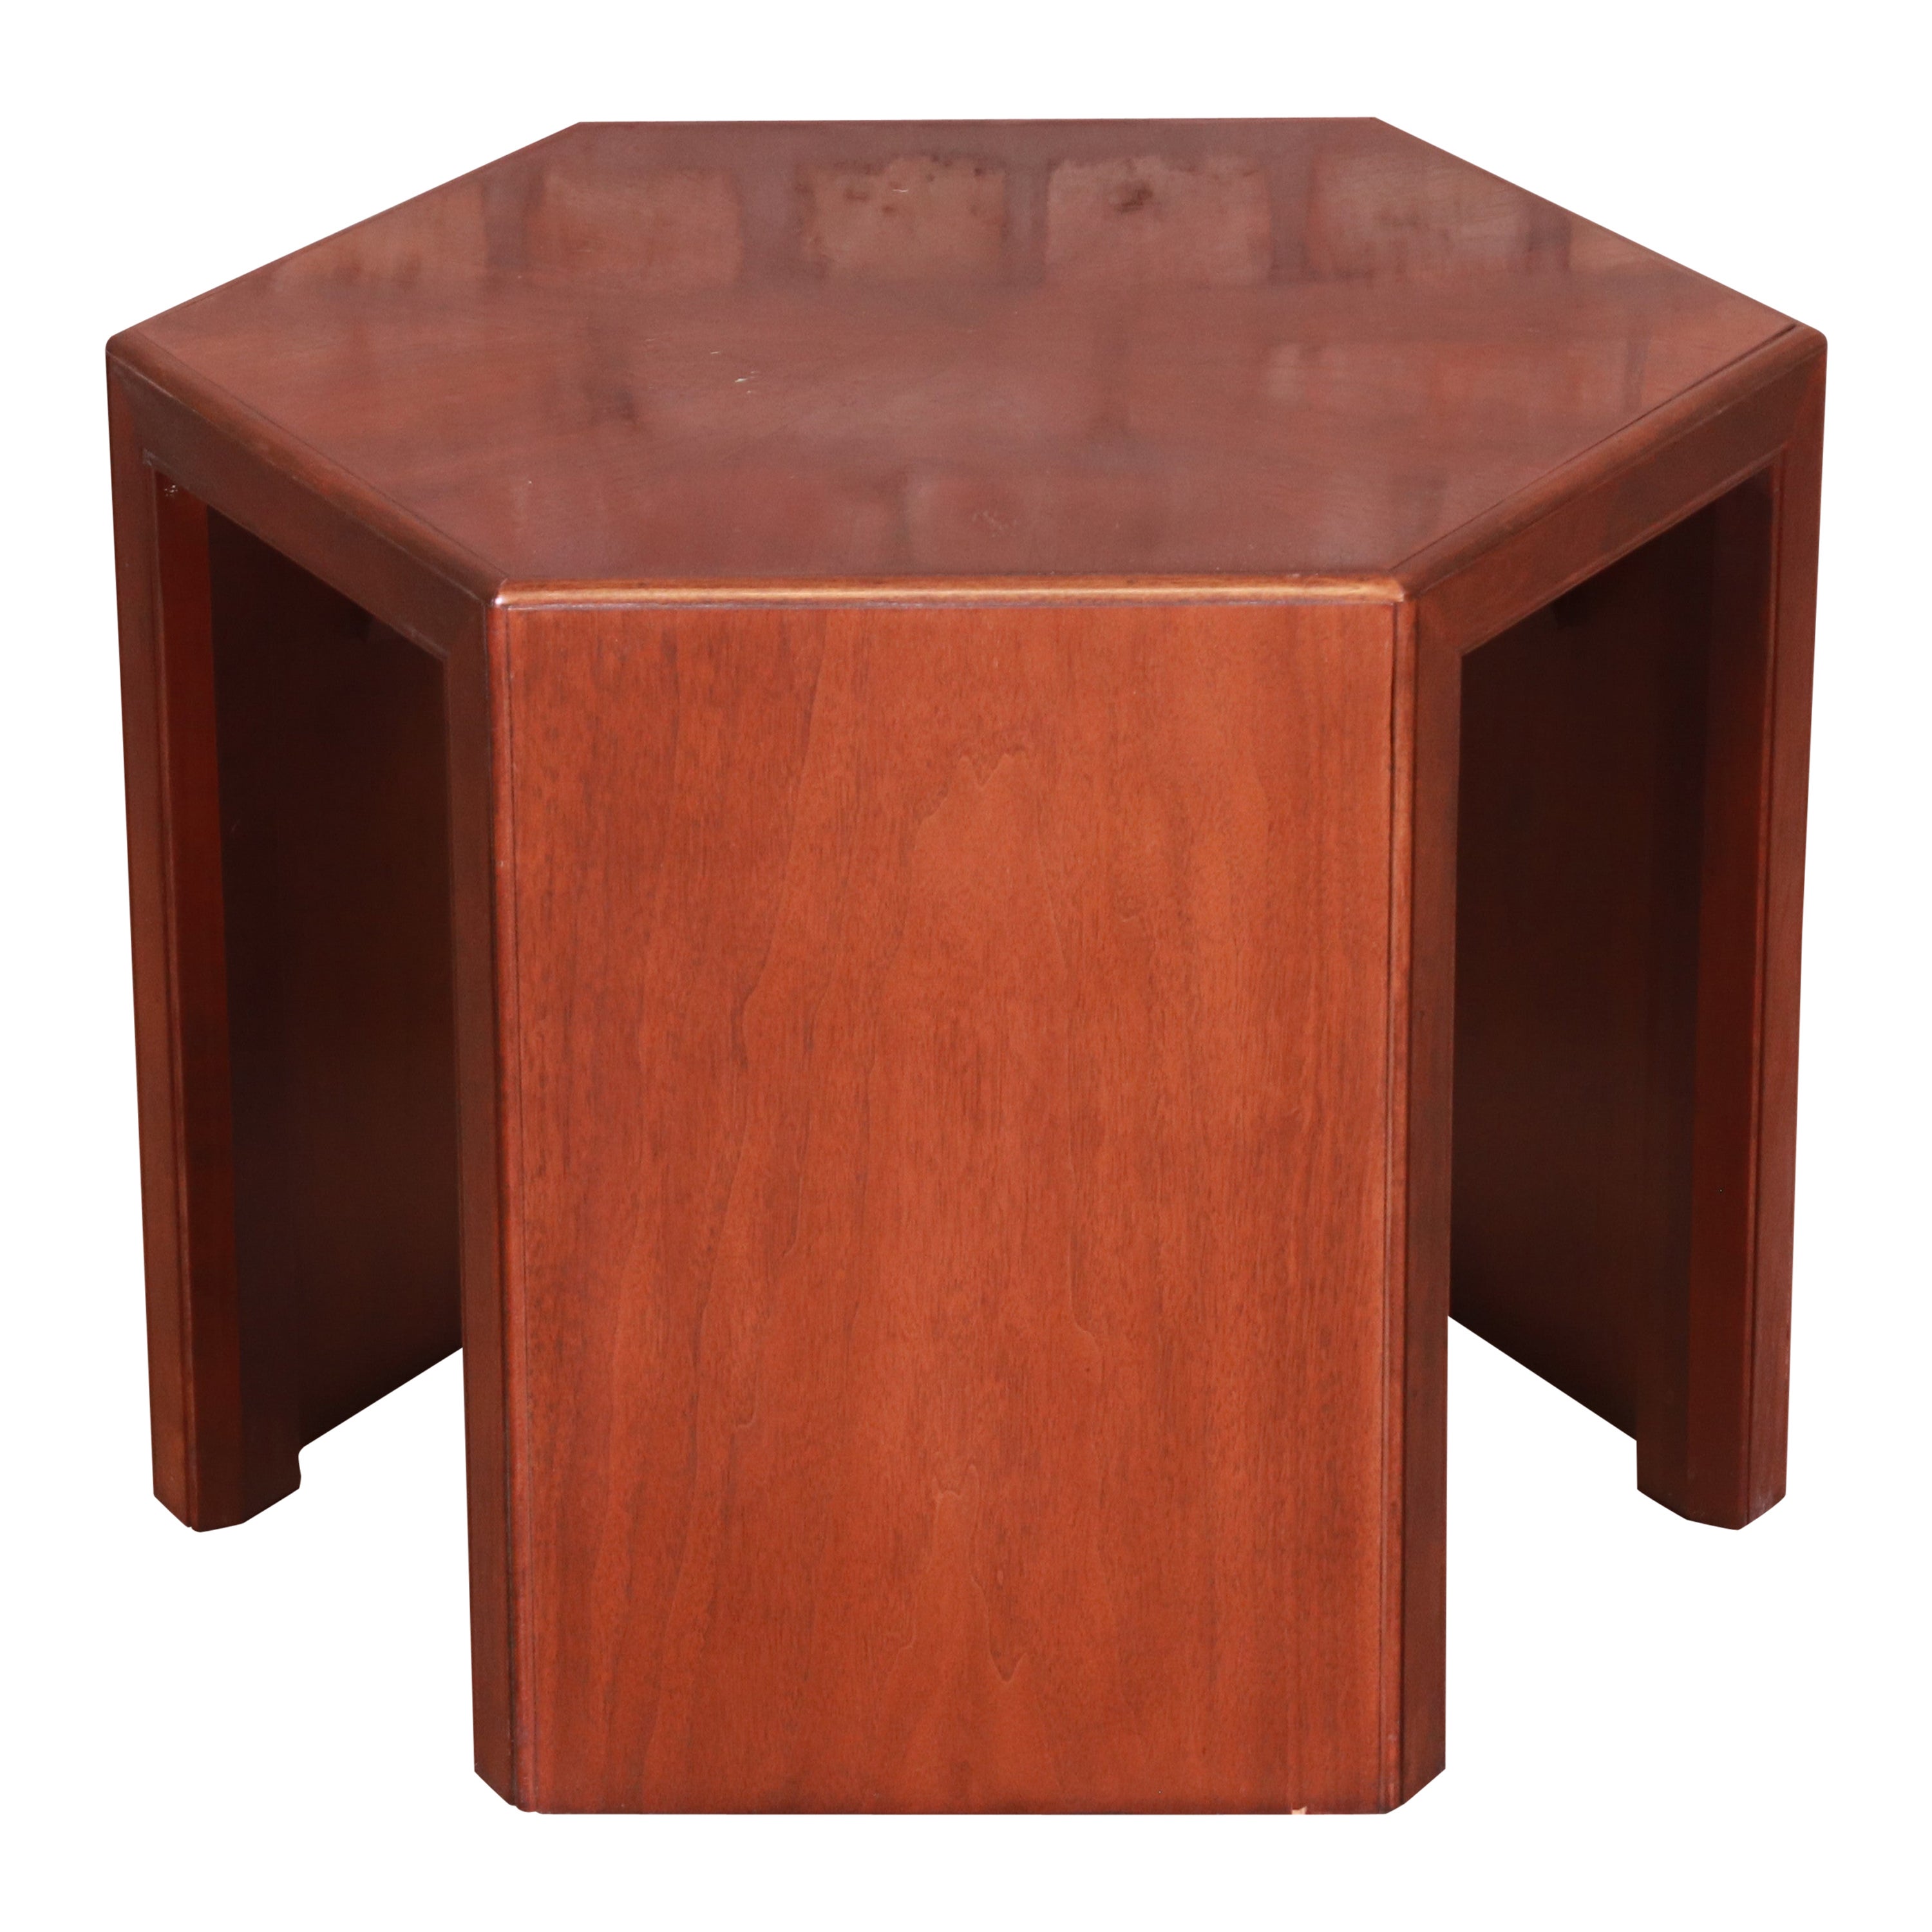 Baker Furniture Mid-Century Modern Walnut Hexagonal Side Table